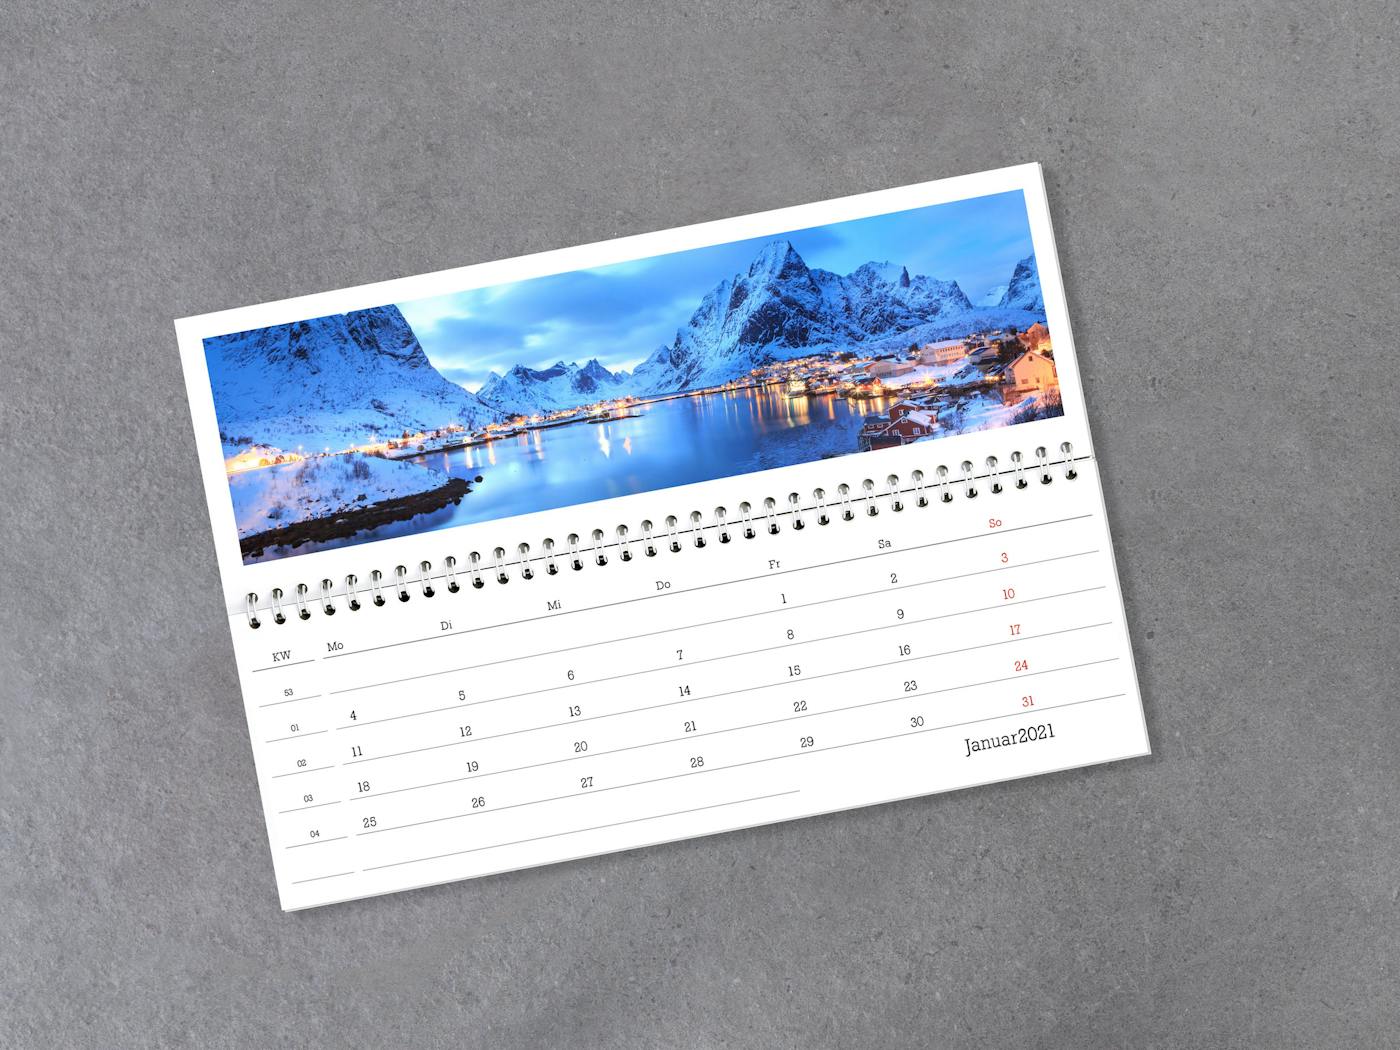 Personalize Your New Desk Calendar